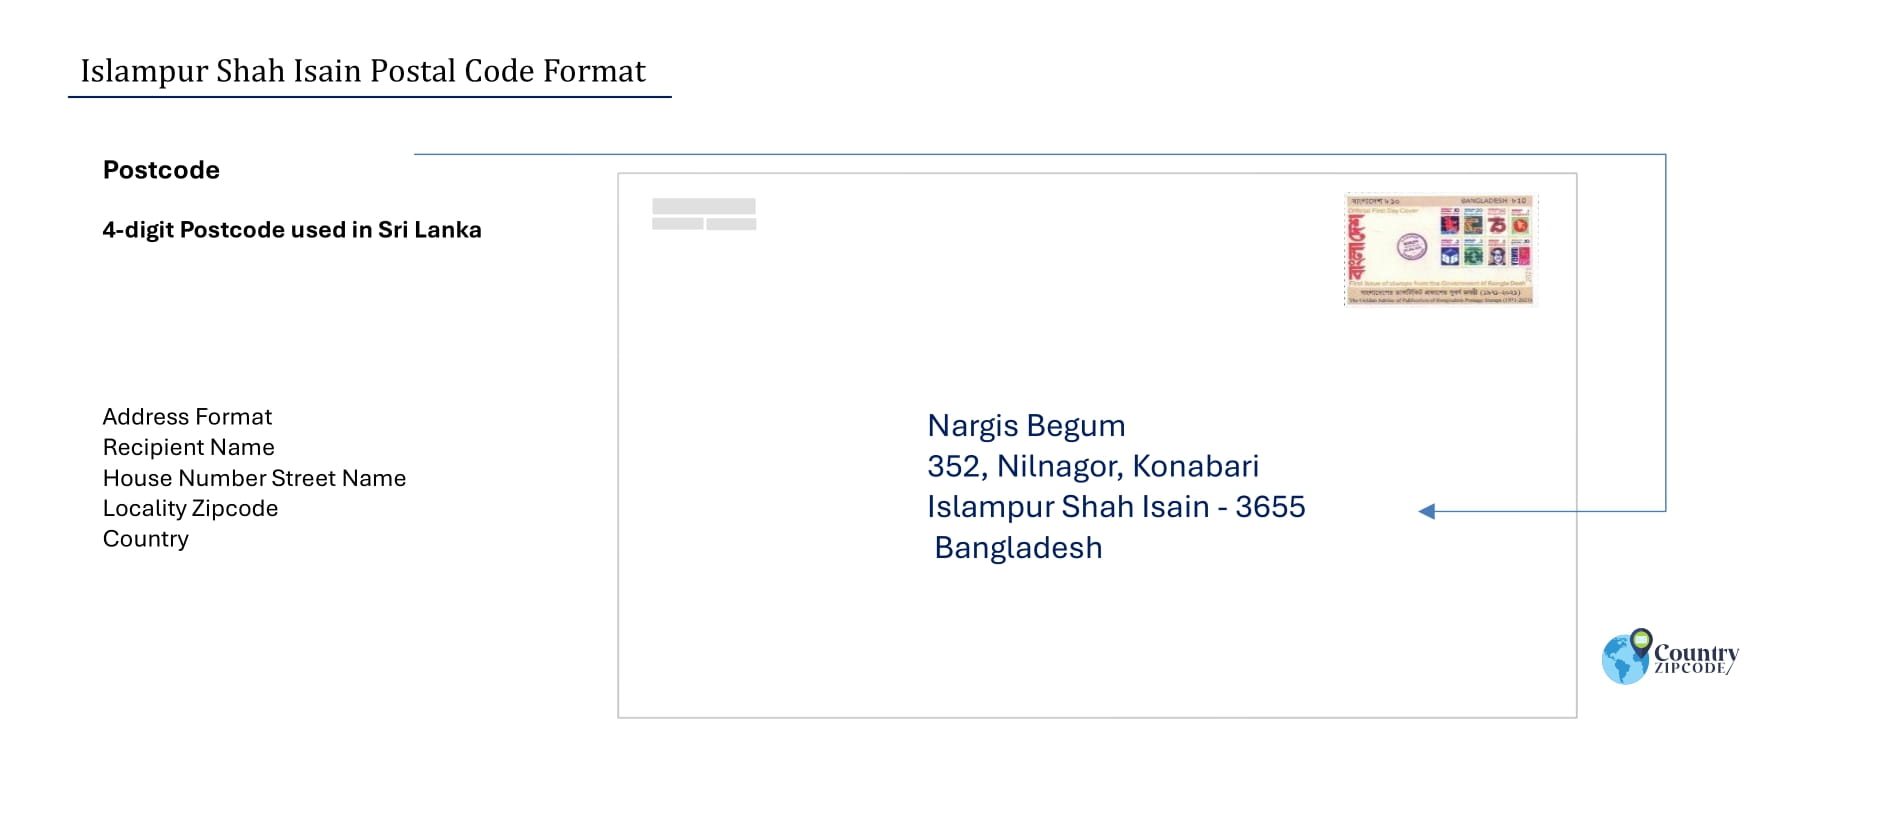 Islampur Shah Isain Postal code format